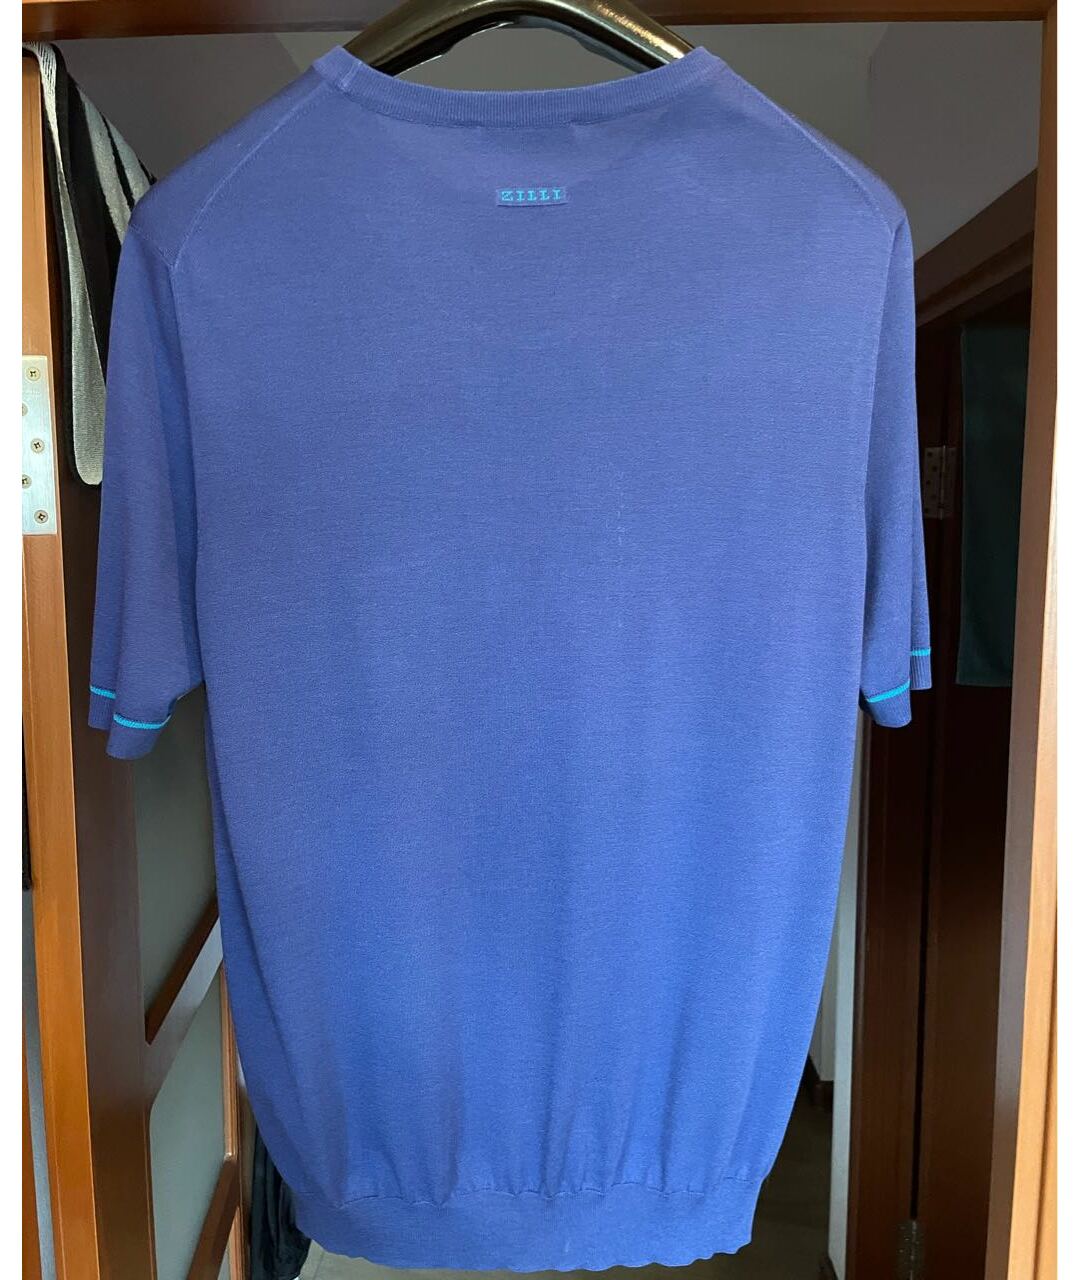 ZILLI Синий шелковый джемпер / свитер, фото 2